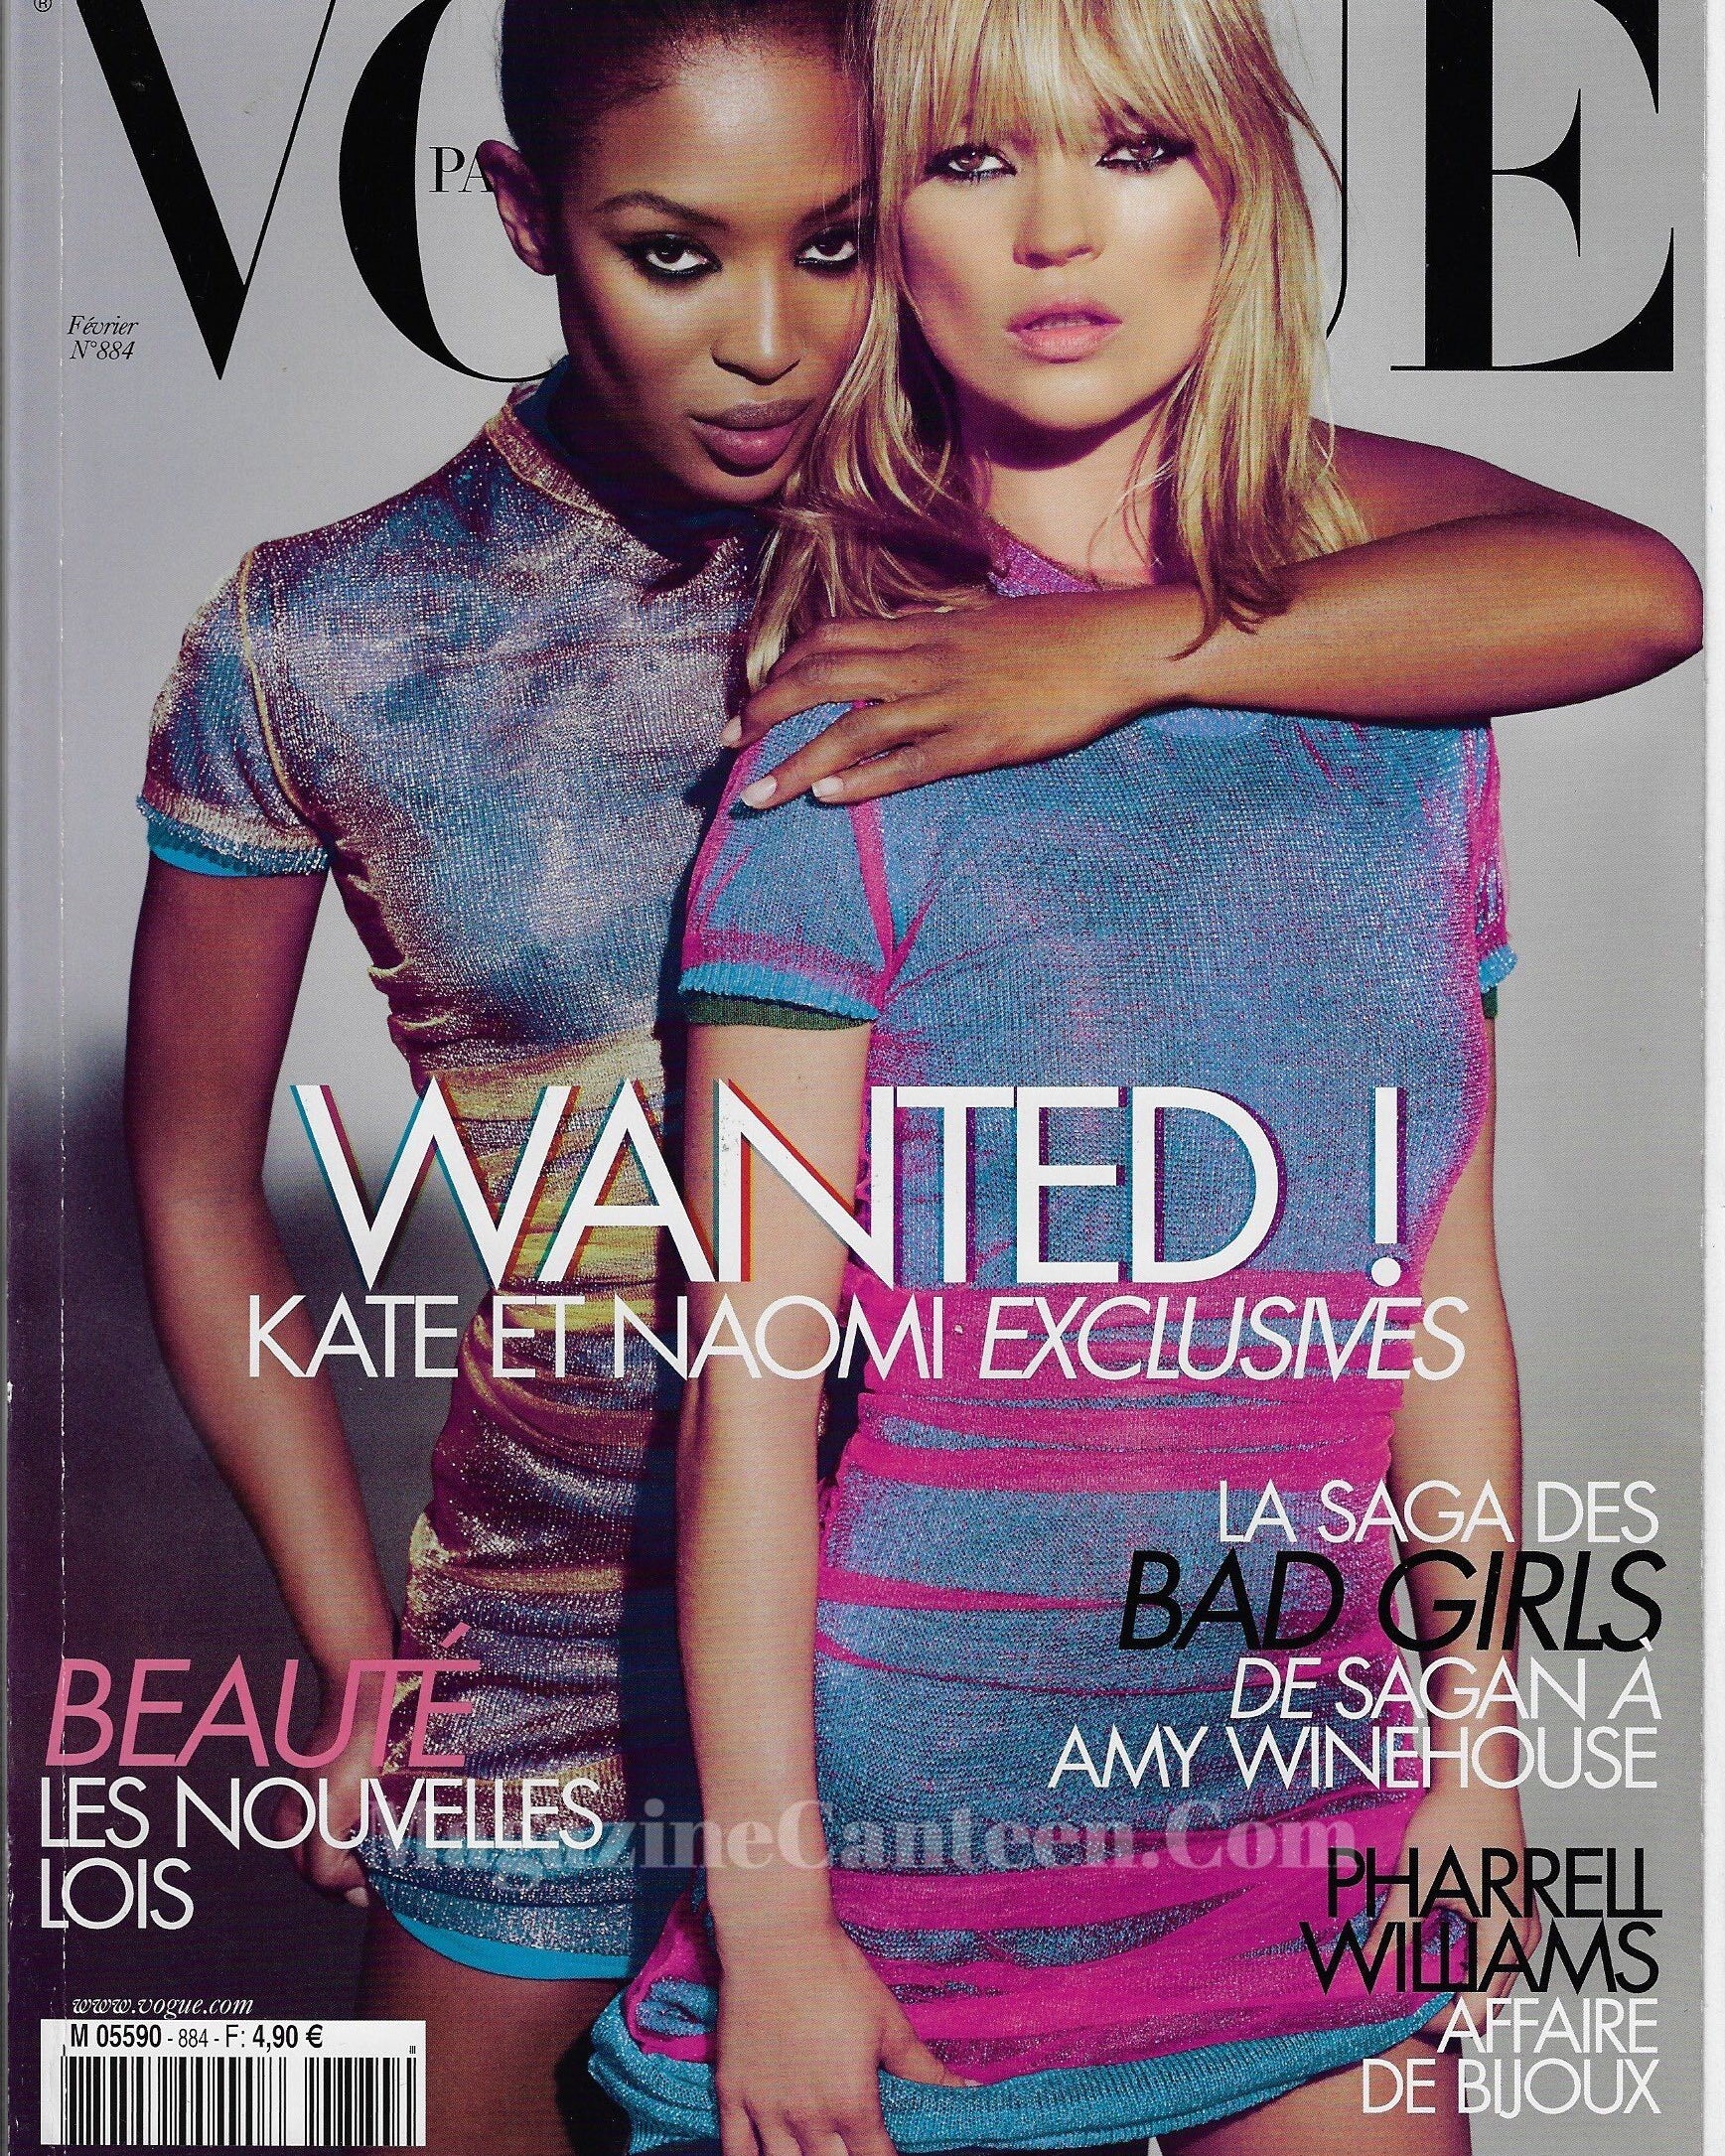 Vogue Paris Magazine 2008 - Kate Moss & Naomi Campbell